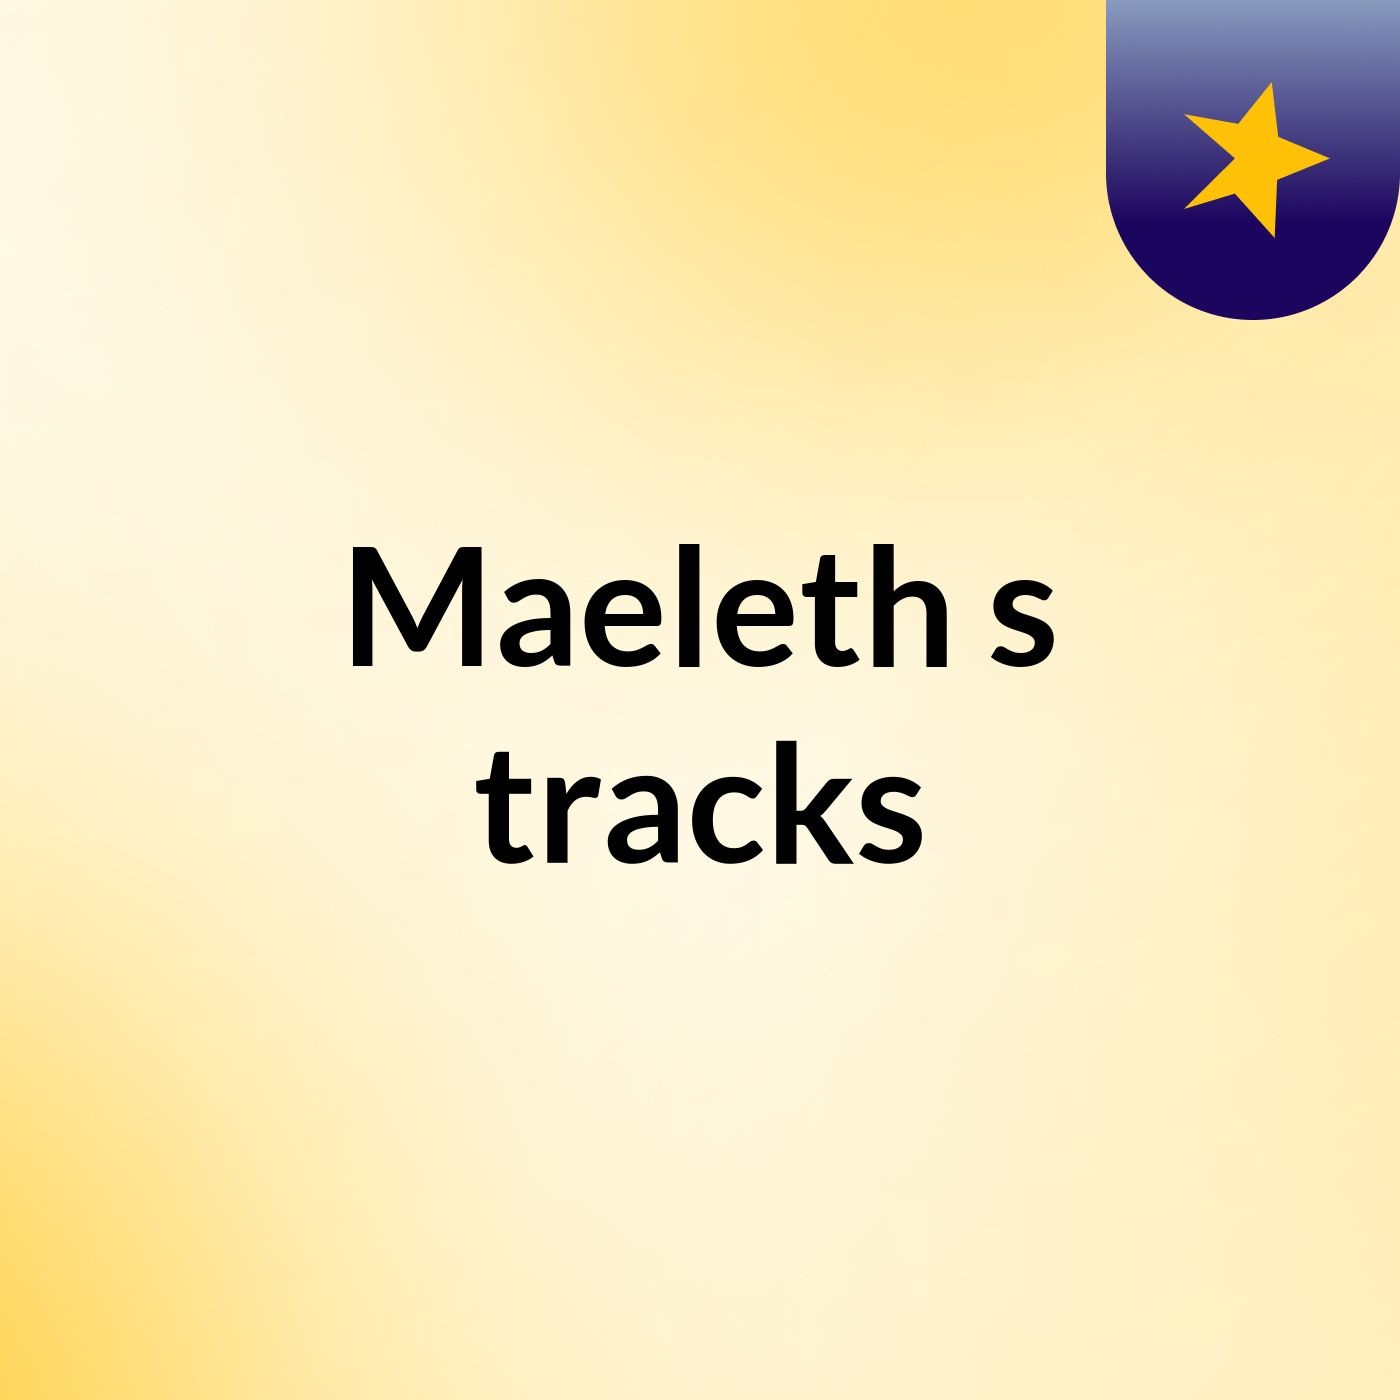 Maeleth's tracks